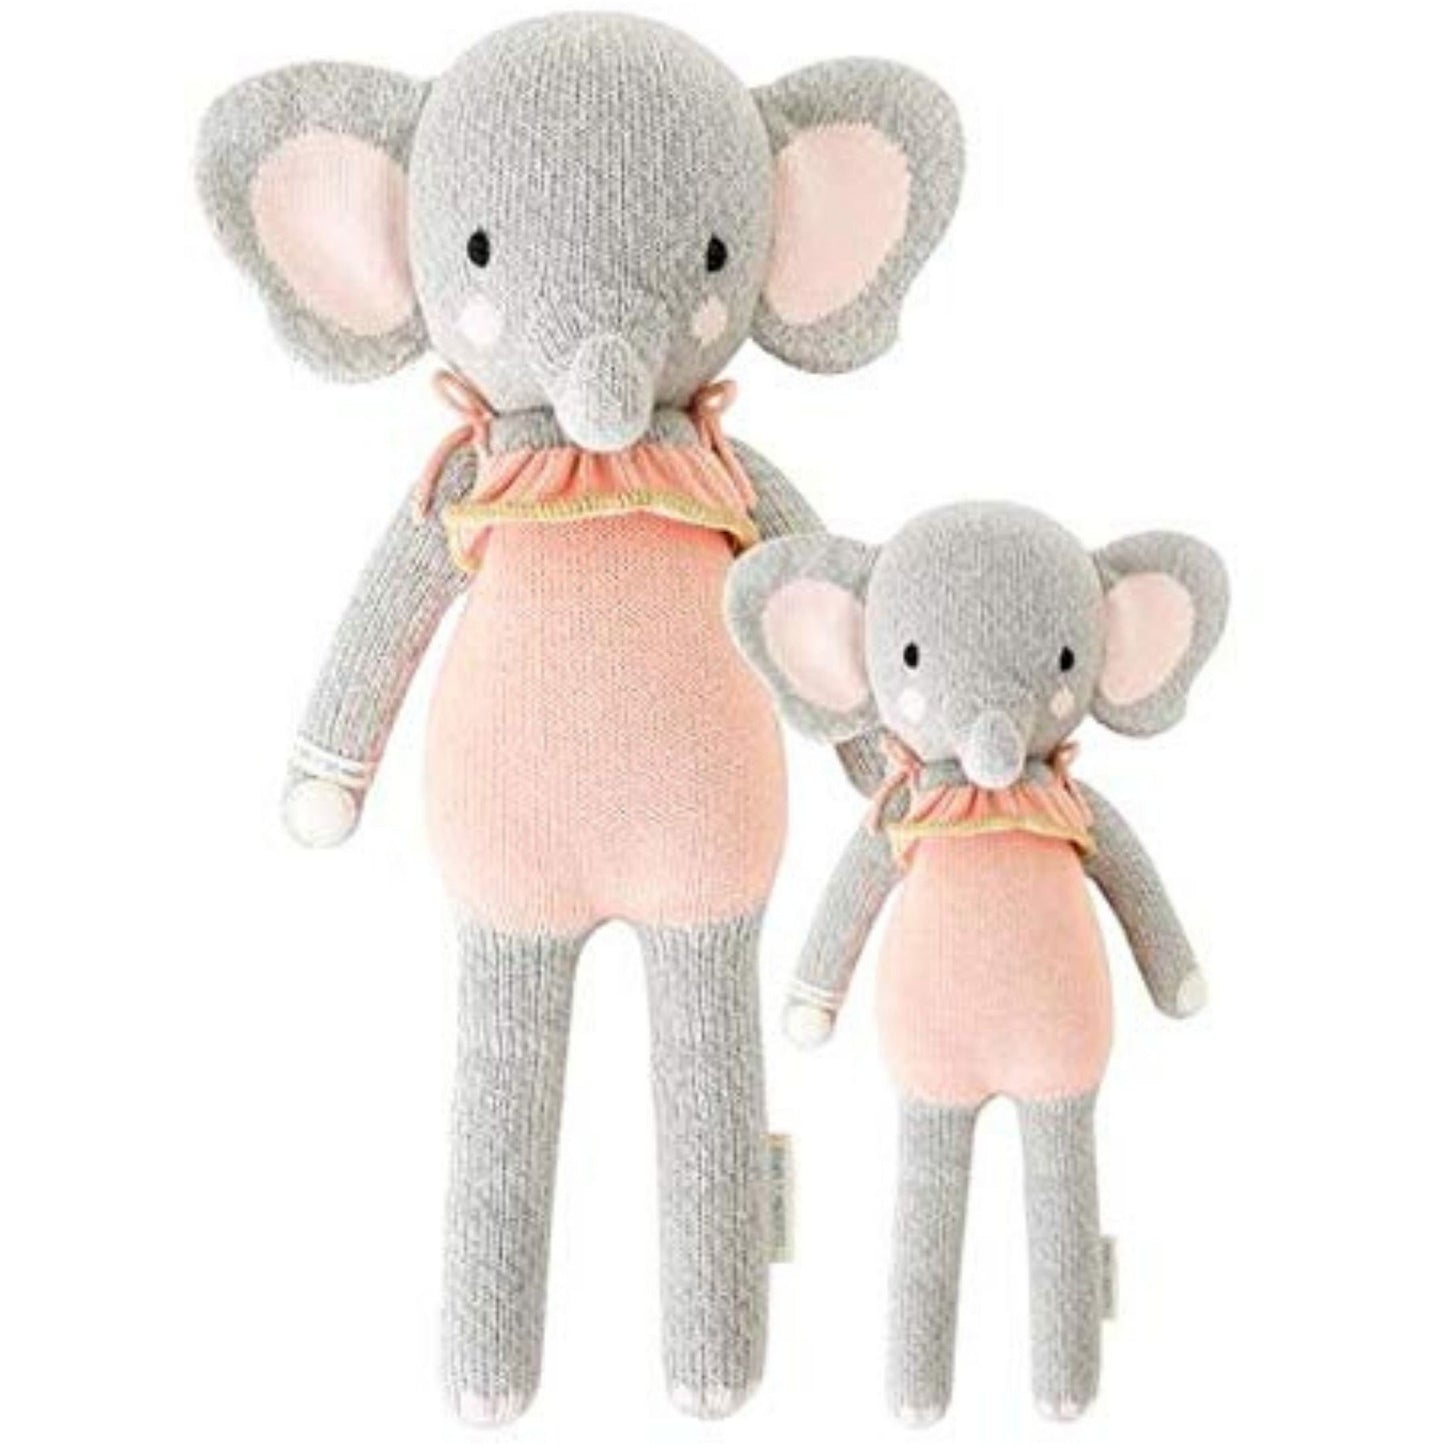 cuddle + kind Hand Knit Little 13" Dolls | Eloise the Elephant